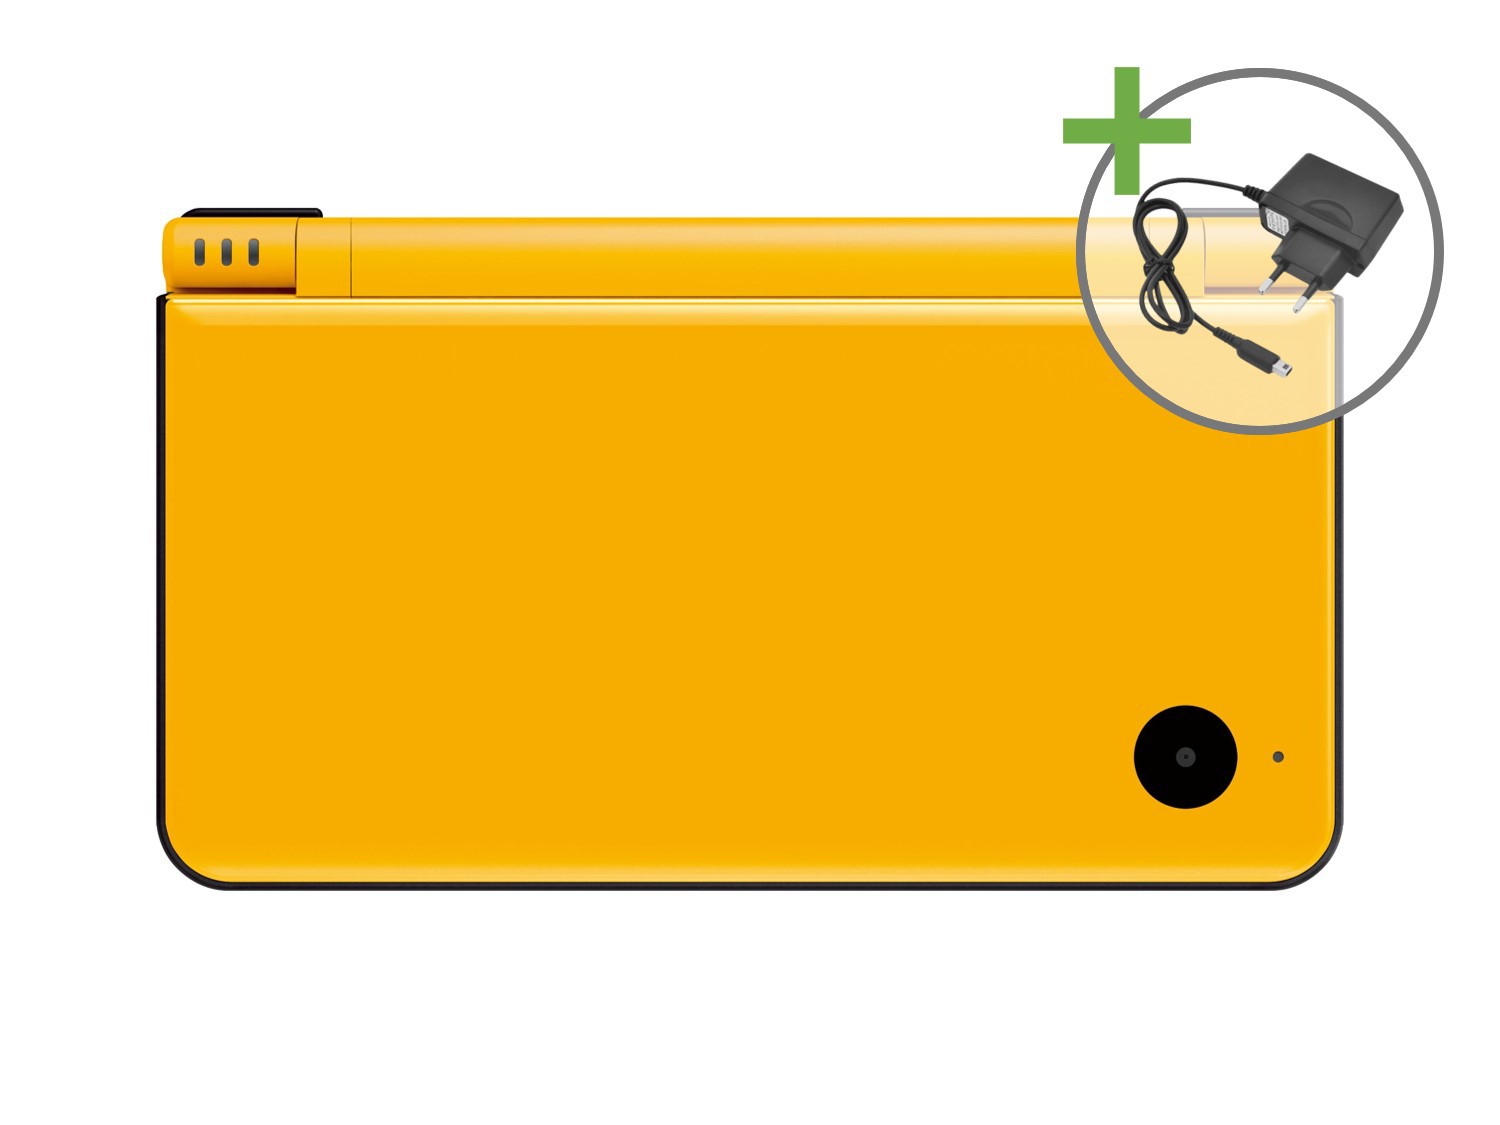 Nintendo DSi XL - Yellow - Nintendo DS Hardware - 3